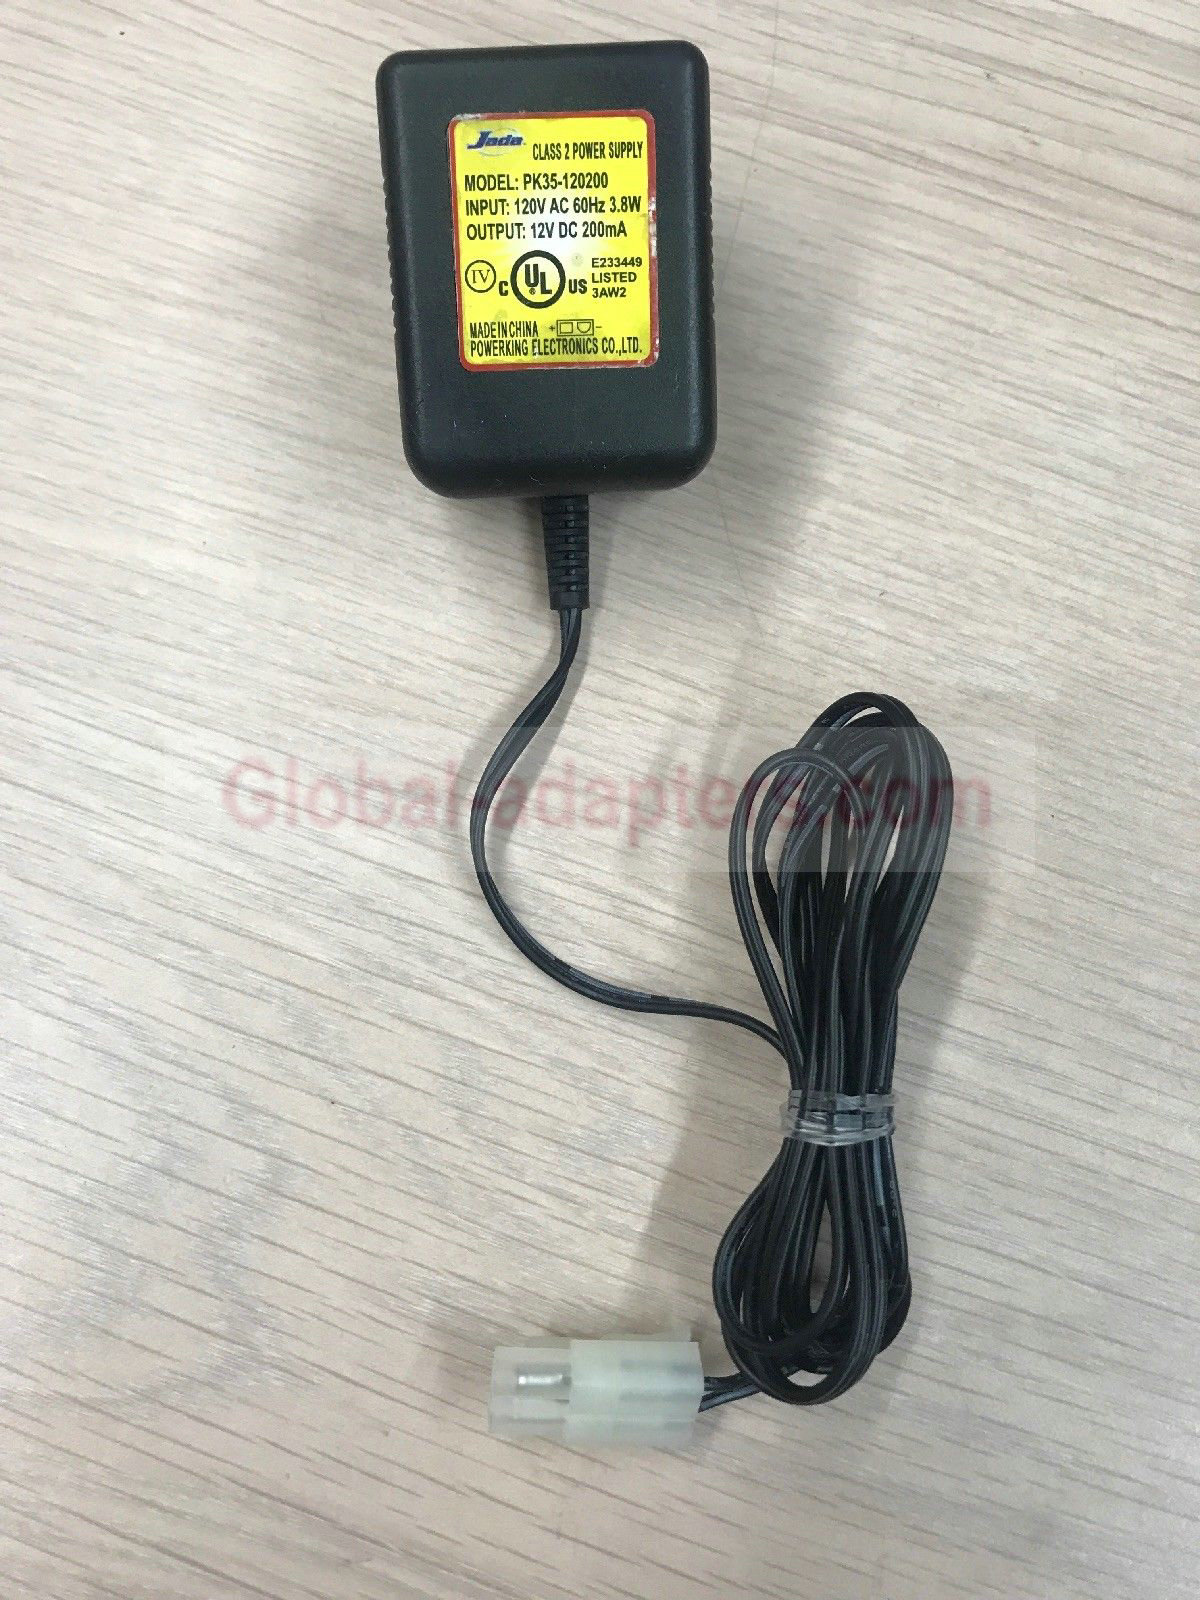 NEW 12V 200mA Jade PK35-120200 AC Power Supply Adapter